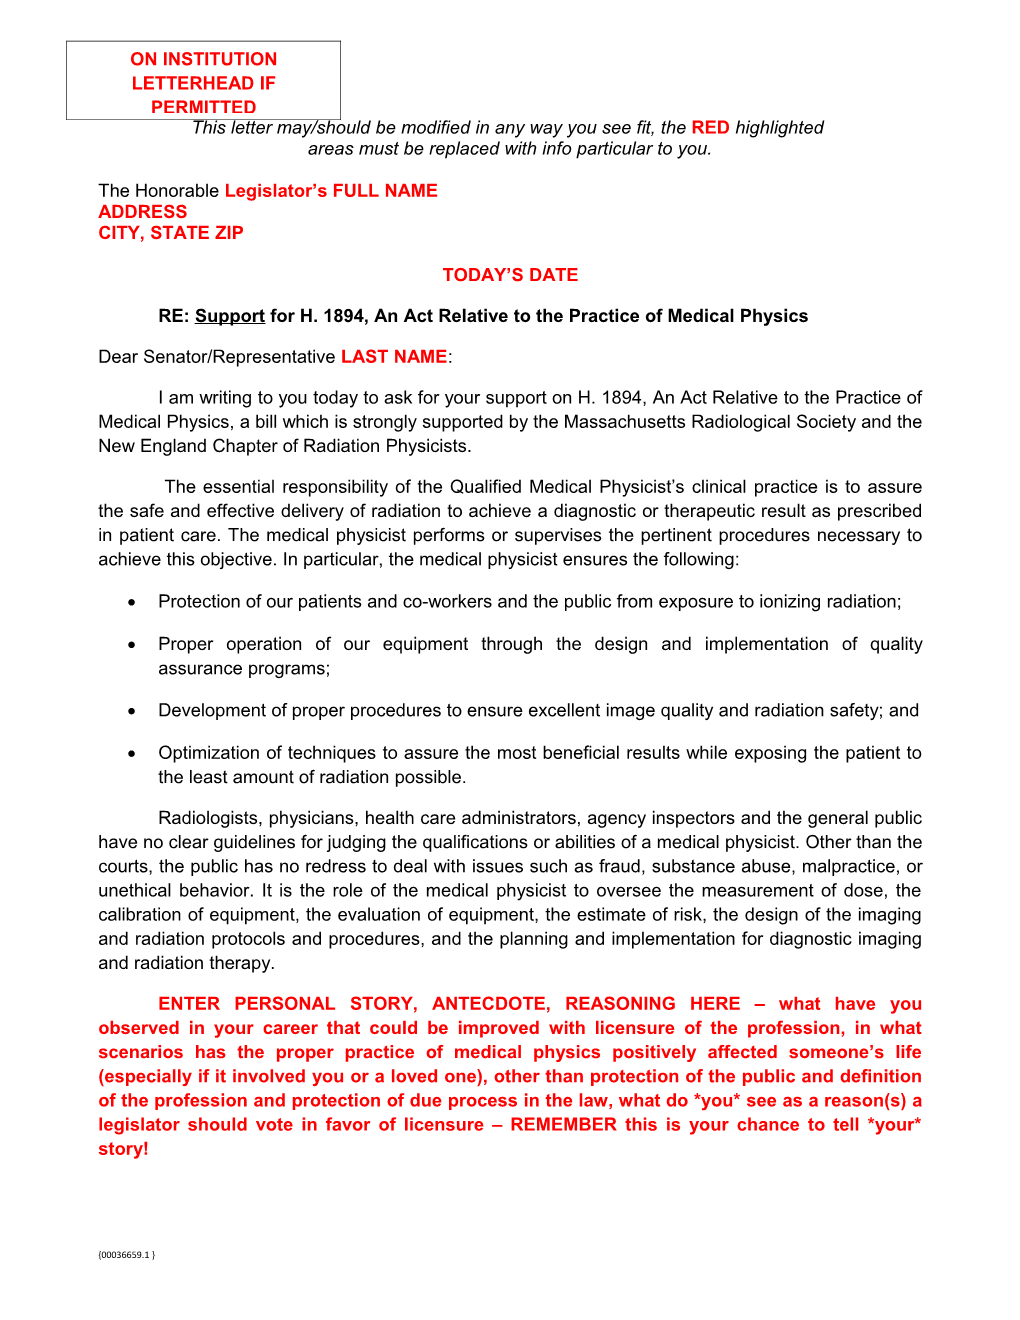 AAPM MA Letter to Legislators 2014 (00036659)